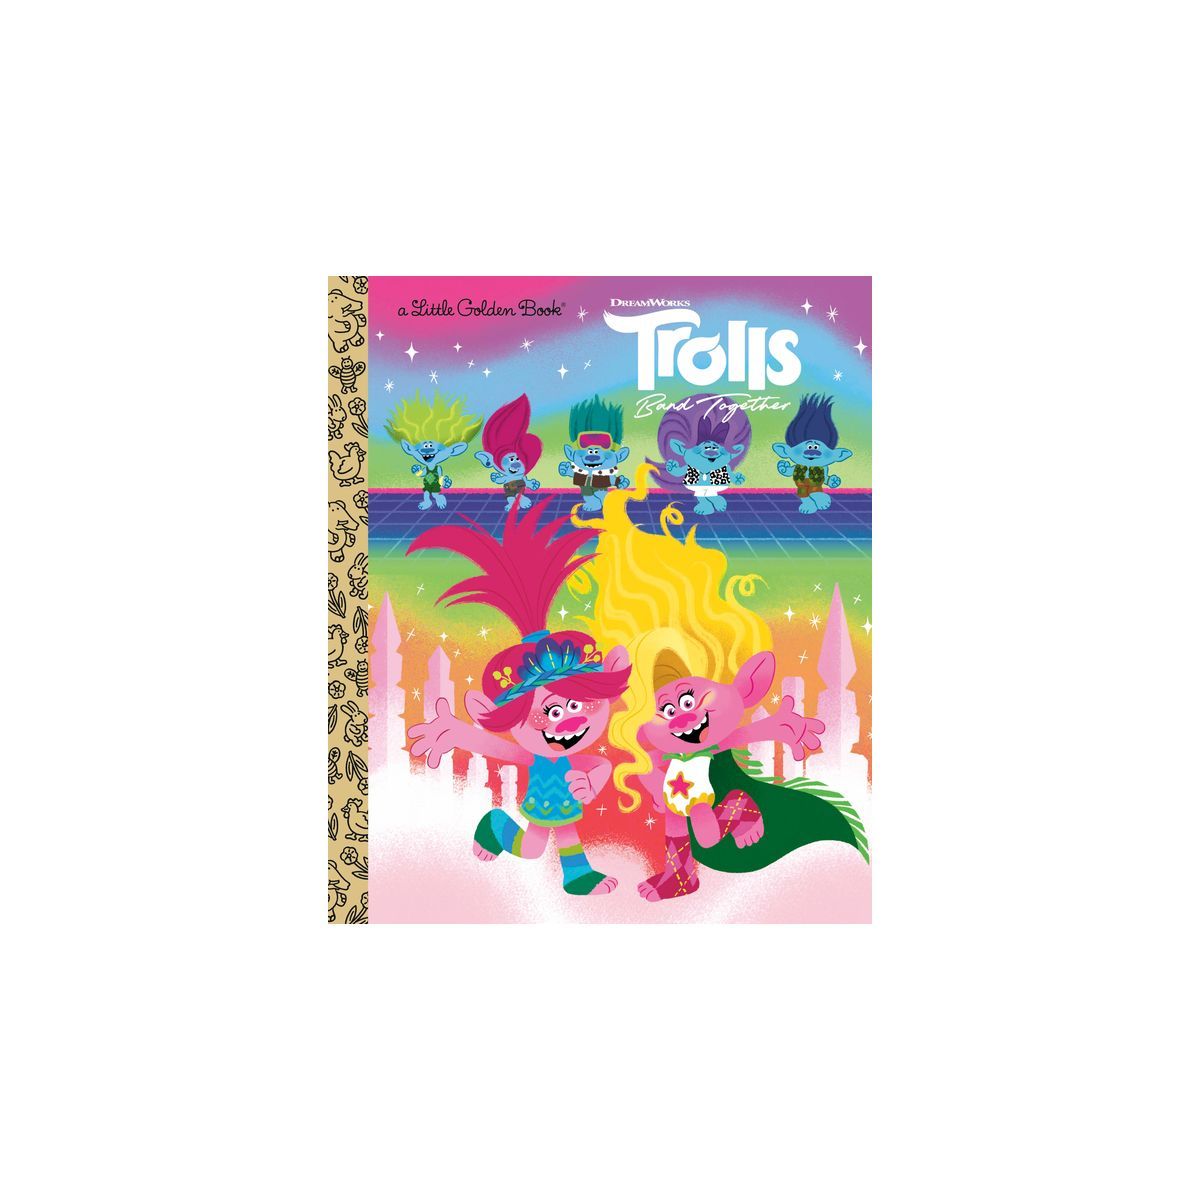 Trolls Band Together Little Golden Book (DreamWorks Trolls) - by David Lewman (Hardcover) | Target